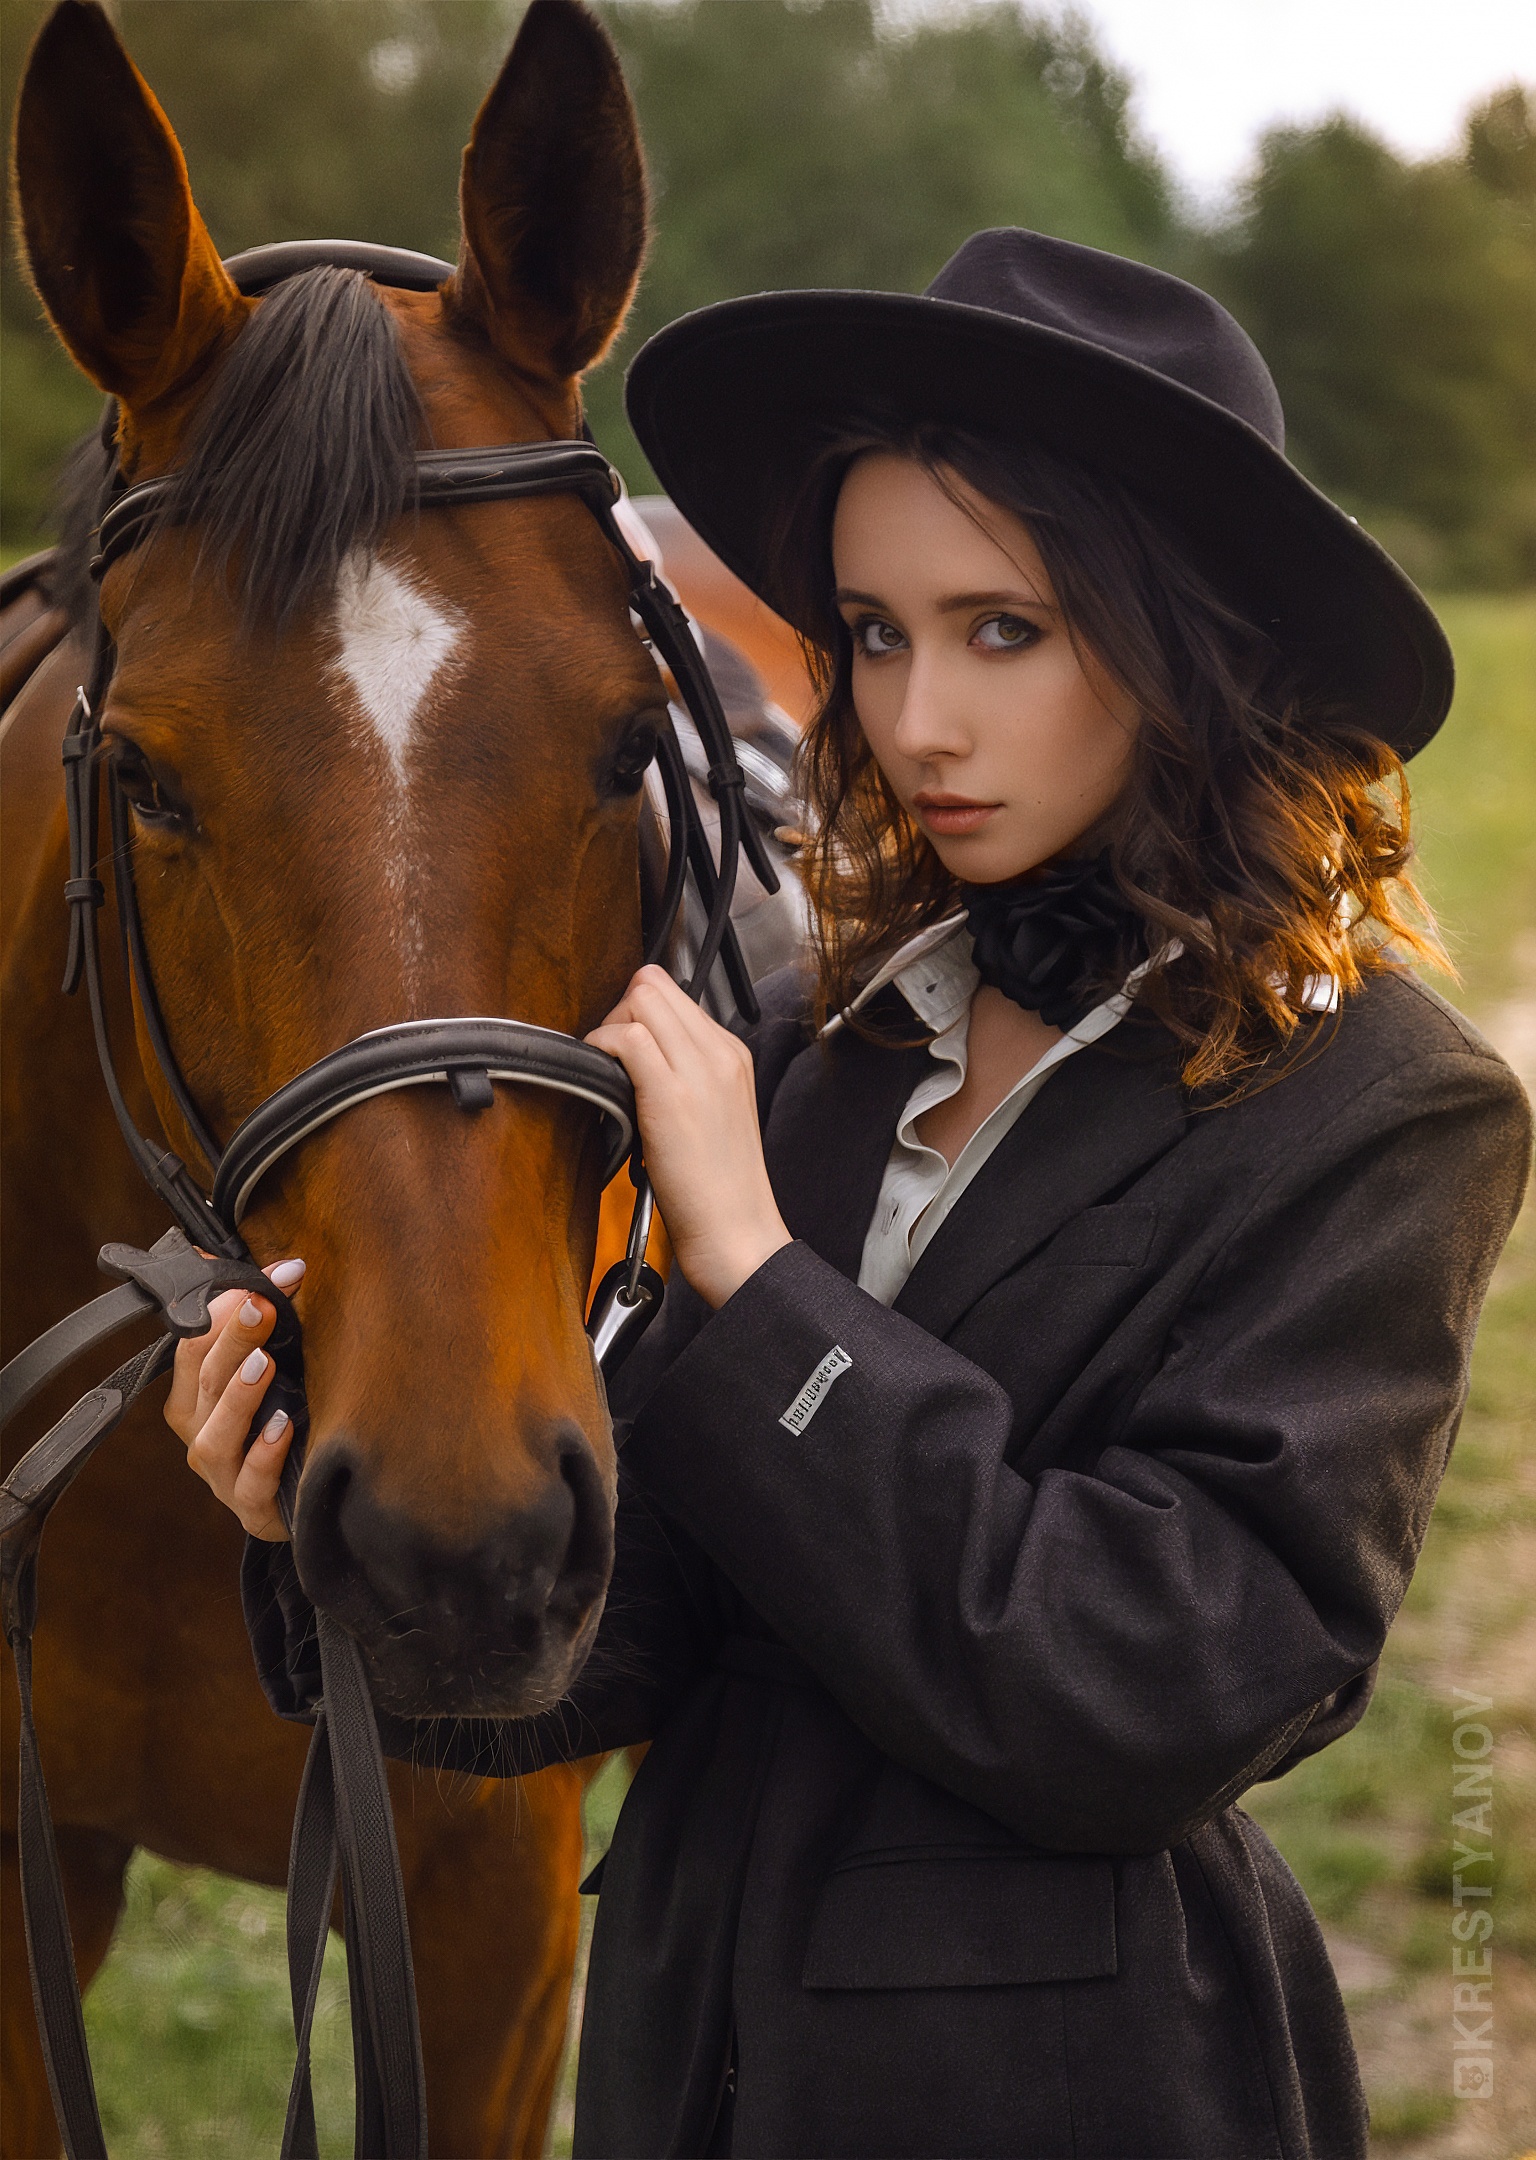 Evgeniy Krestyanov Women Hat Horse Black Clothing Portrait Display Watermarked 1536x2160